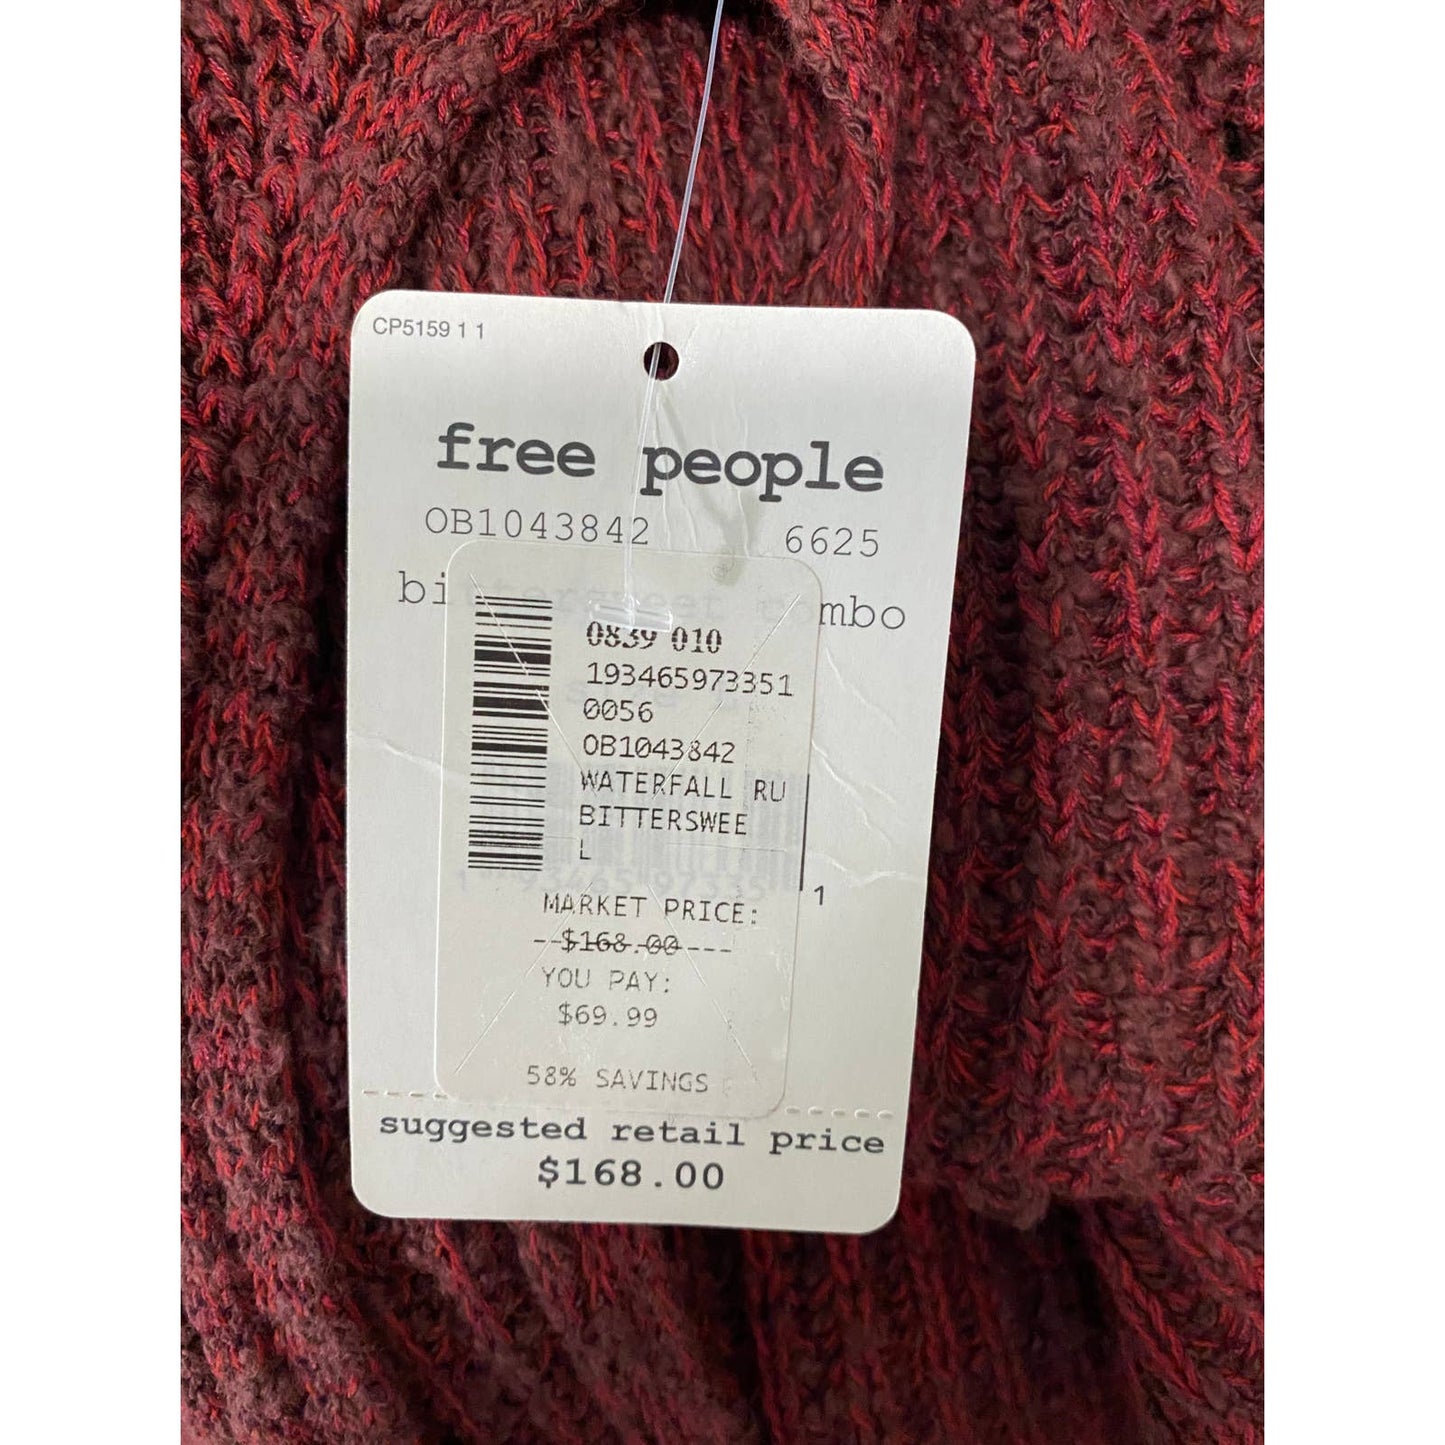 Free People | Waterfall Ruffle Dress | Sz L